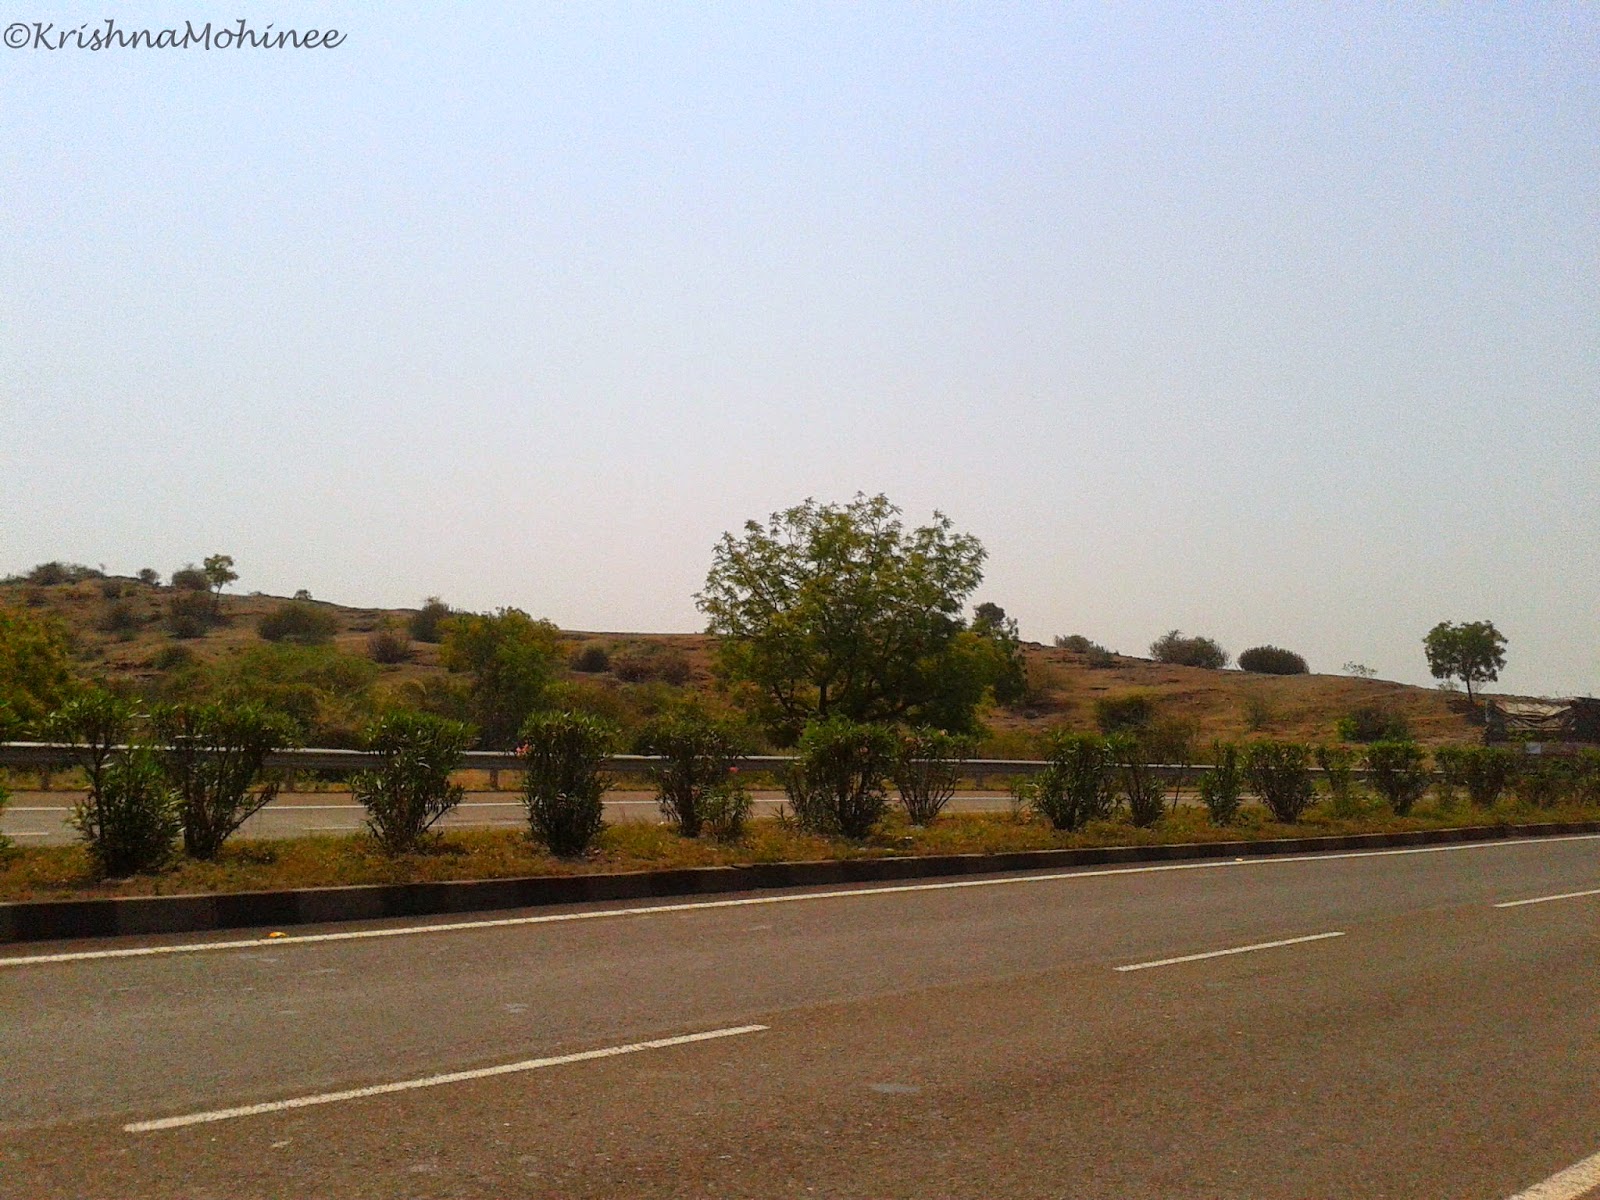 Image: Mumbai-Agra Highway